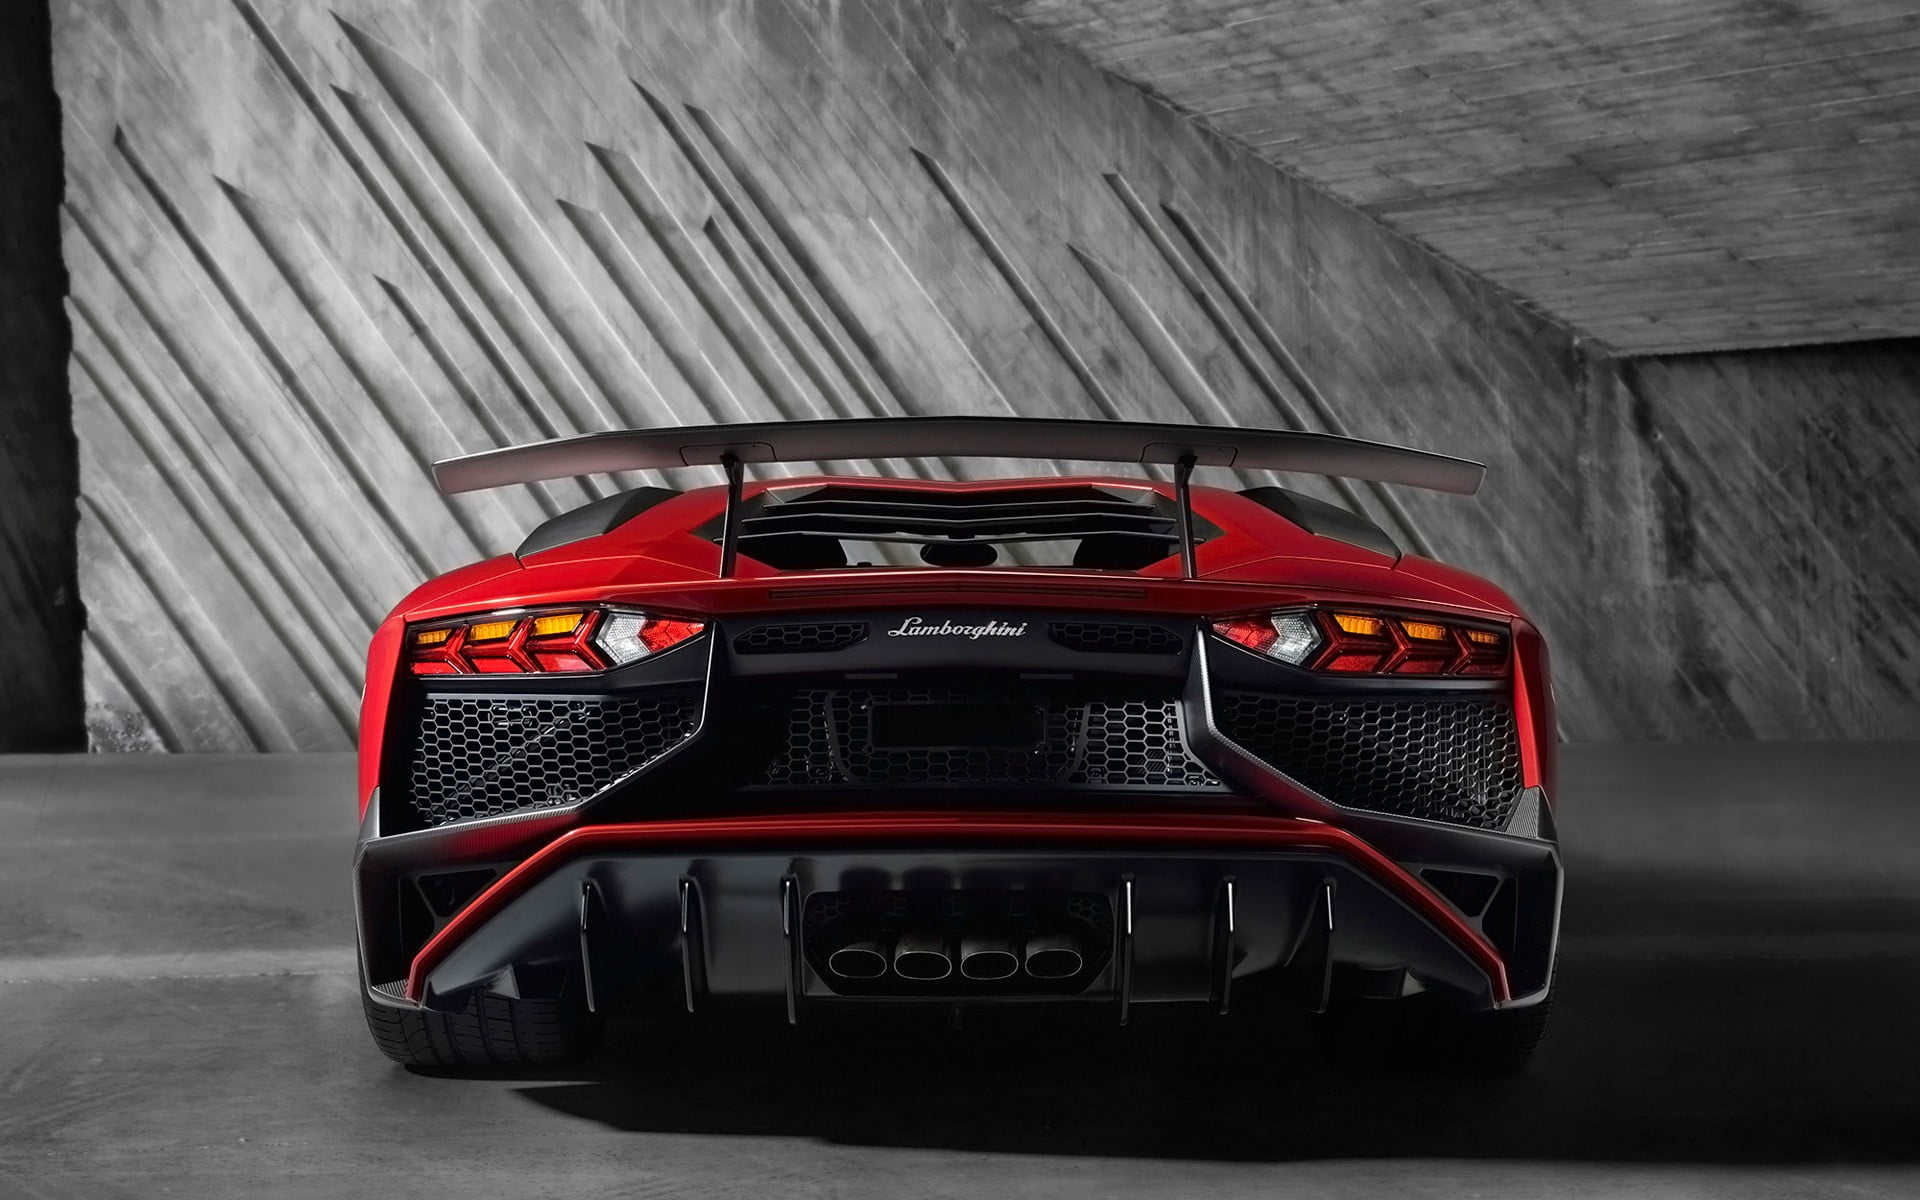 red and black Lamborghini luxury car, Lamborghini Aventador LP750-4 Superveloce